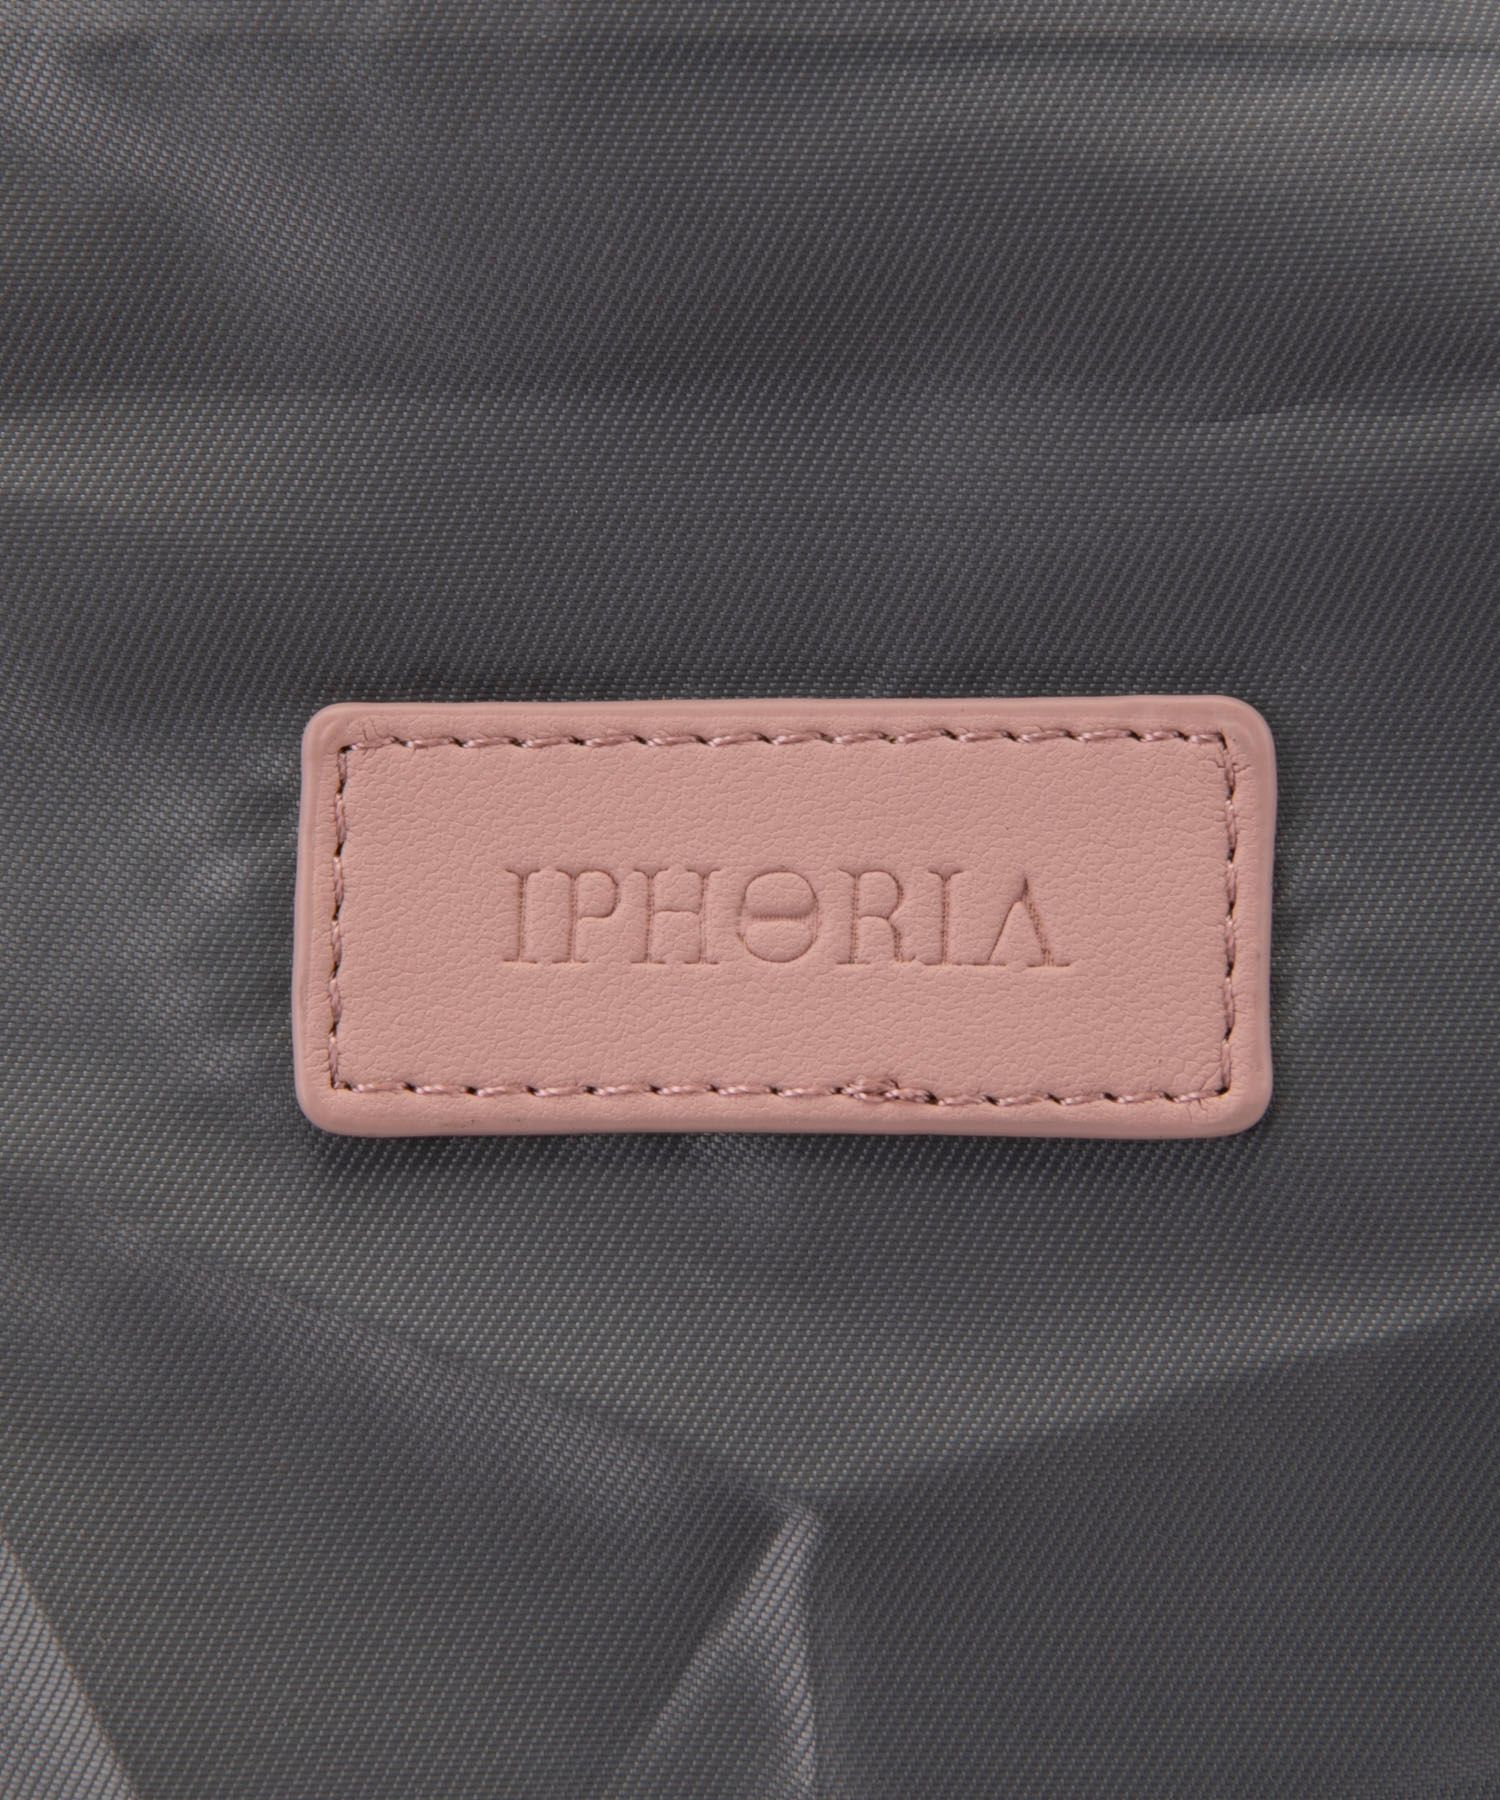 IPHORIA - Washbag - Nude Pattern | IPHORIA